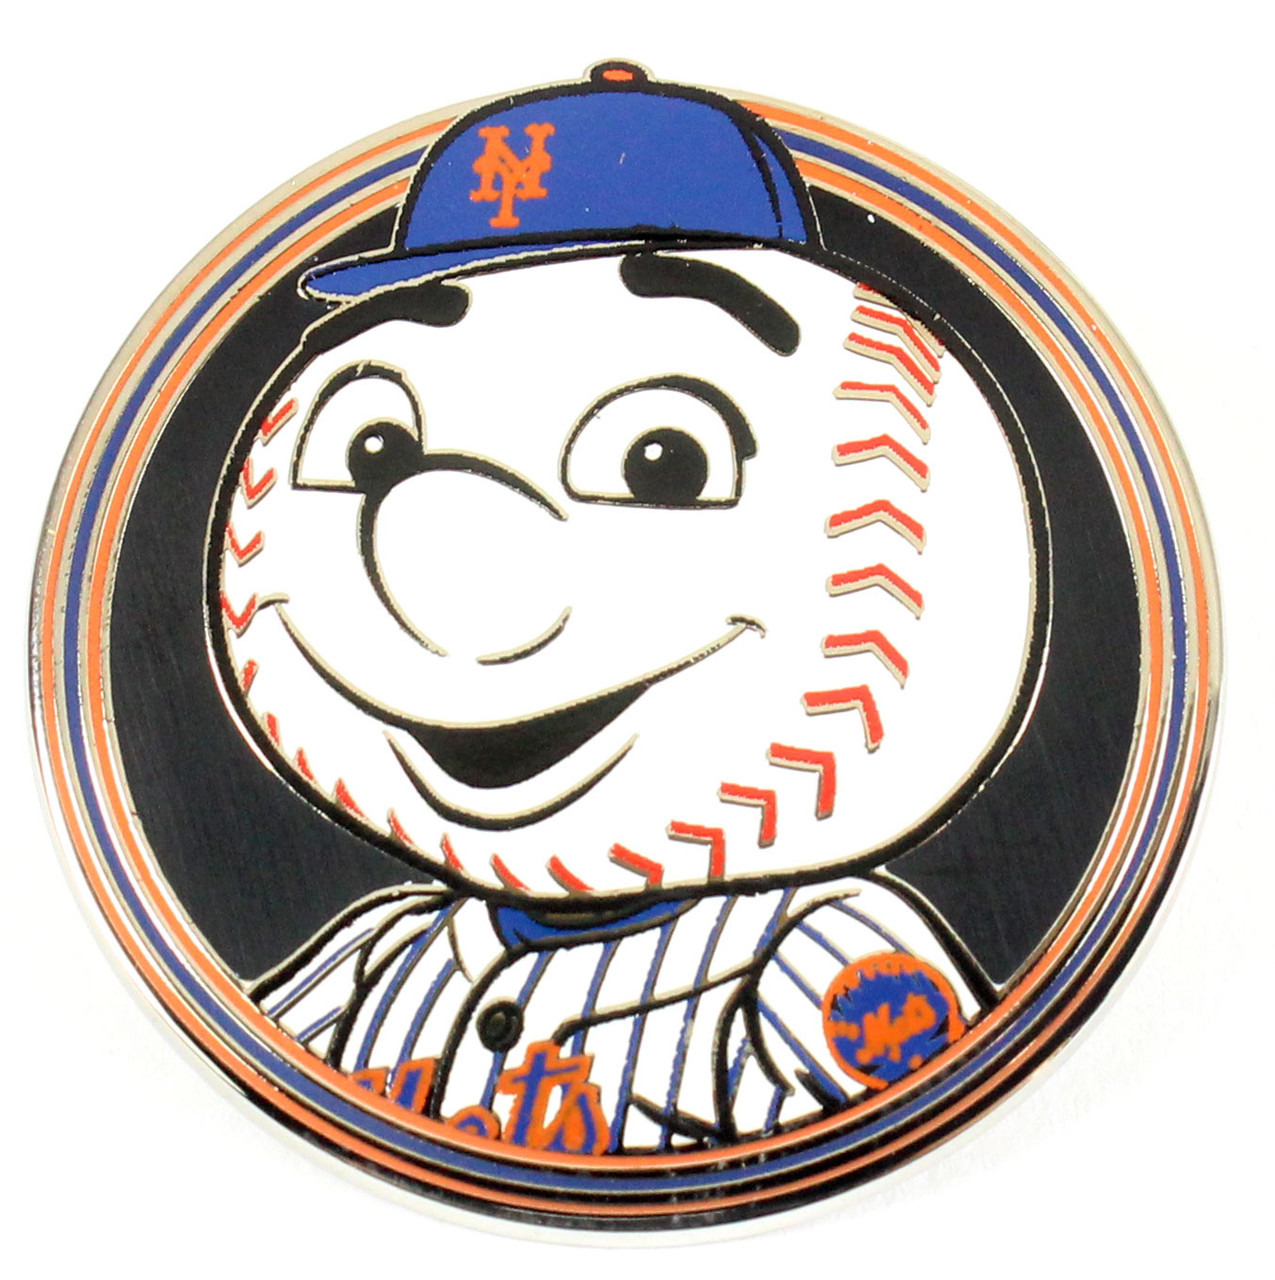 Play Ball! Mets Baseball Mascot Mr Met - New York Mets - Magnet